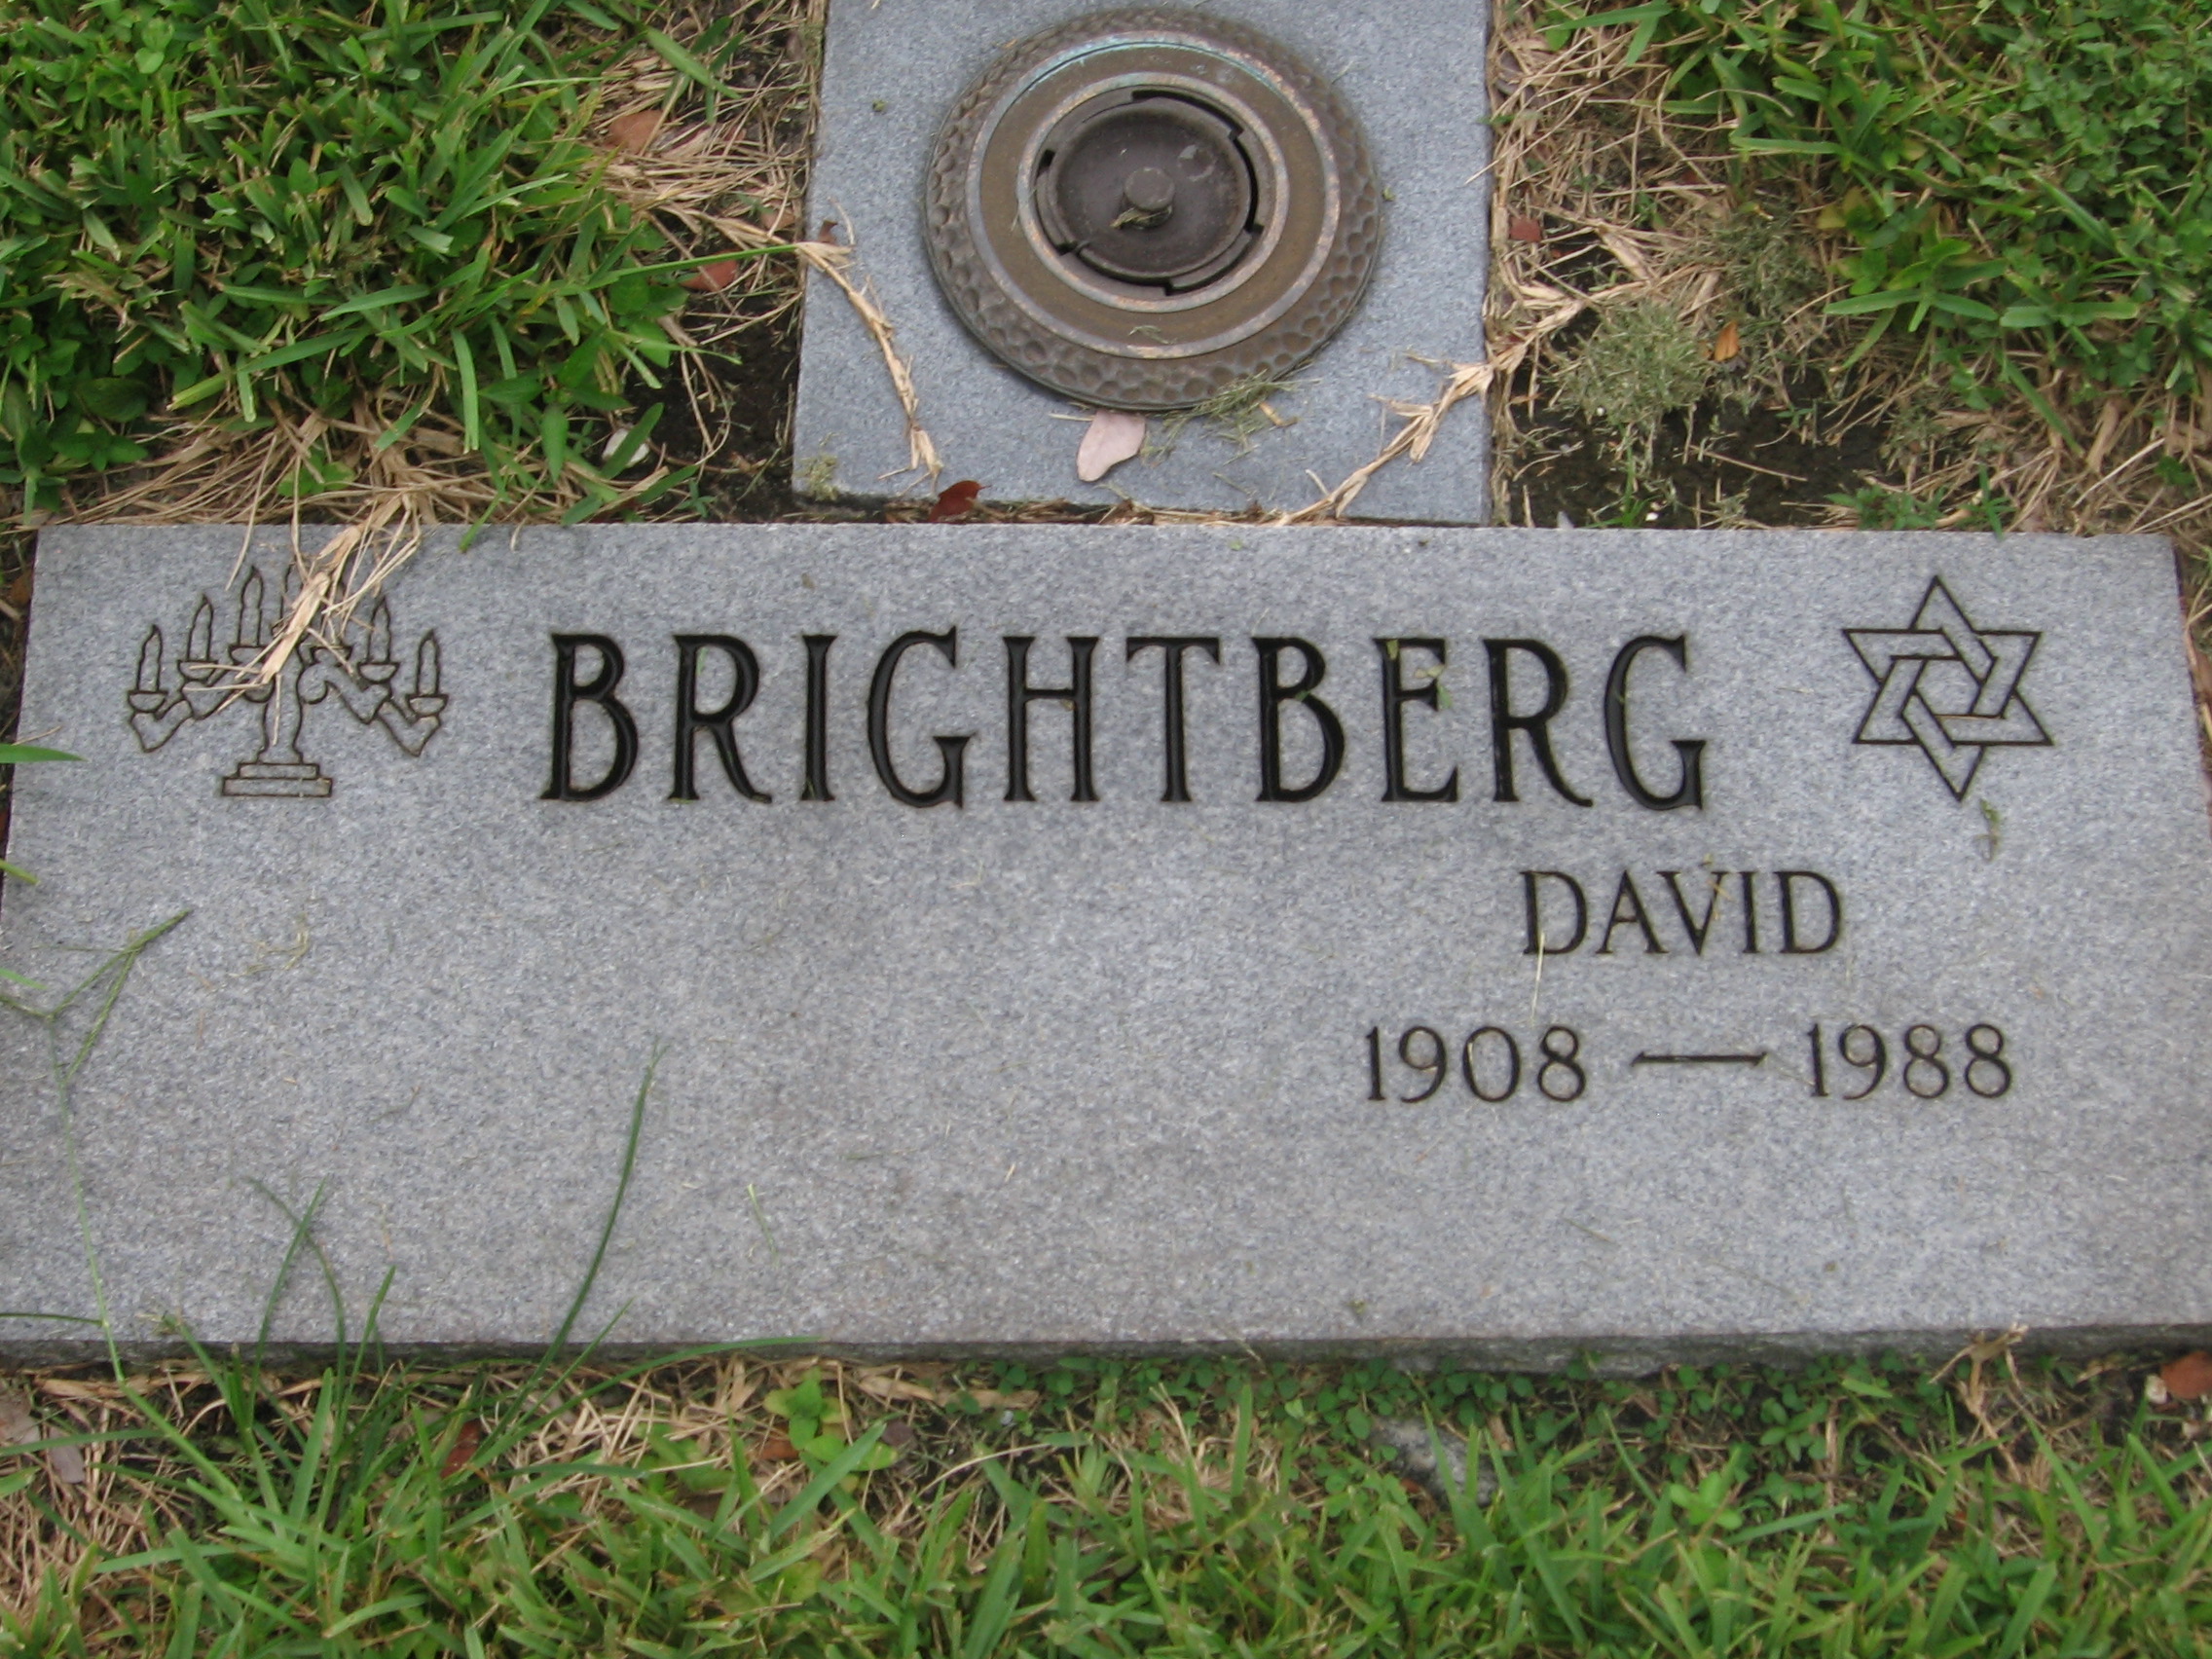 David Brightberg